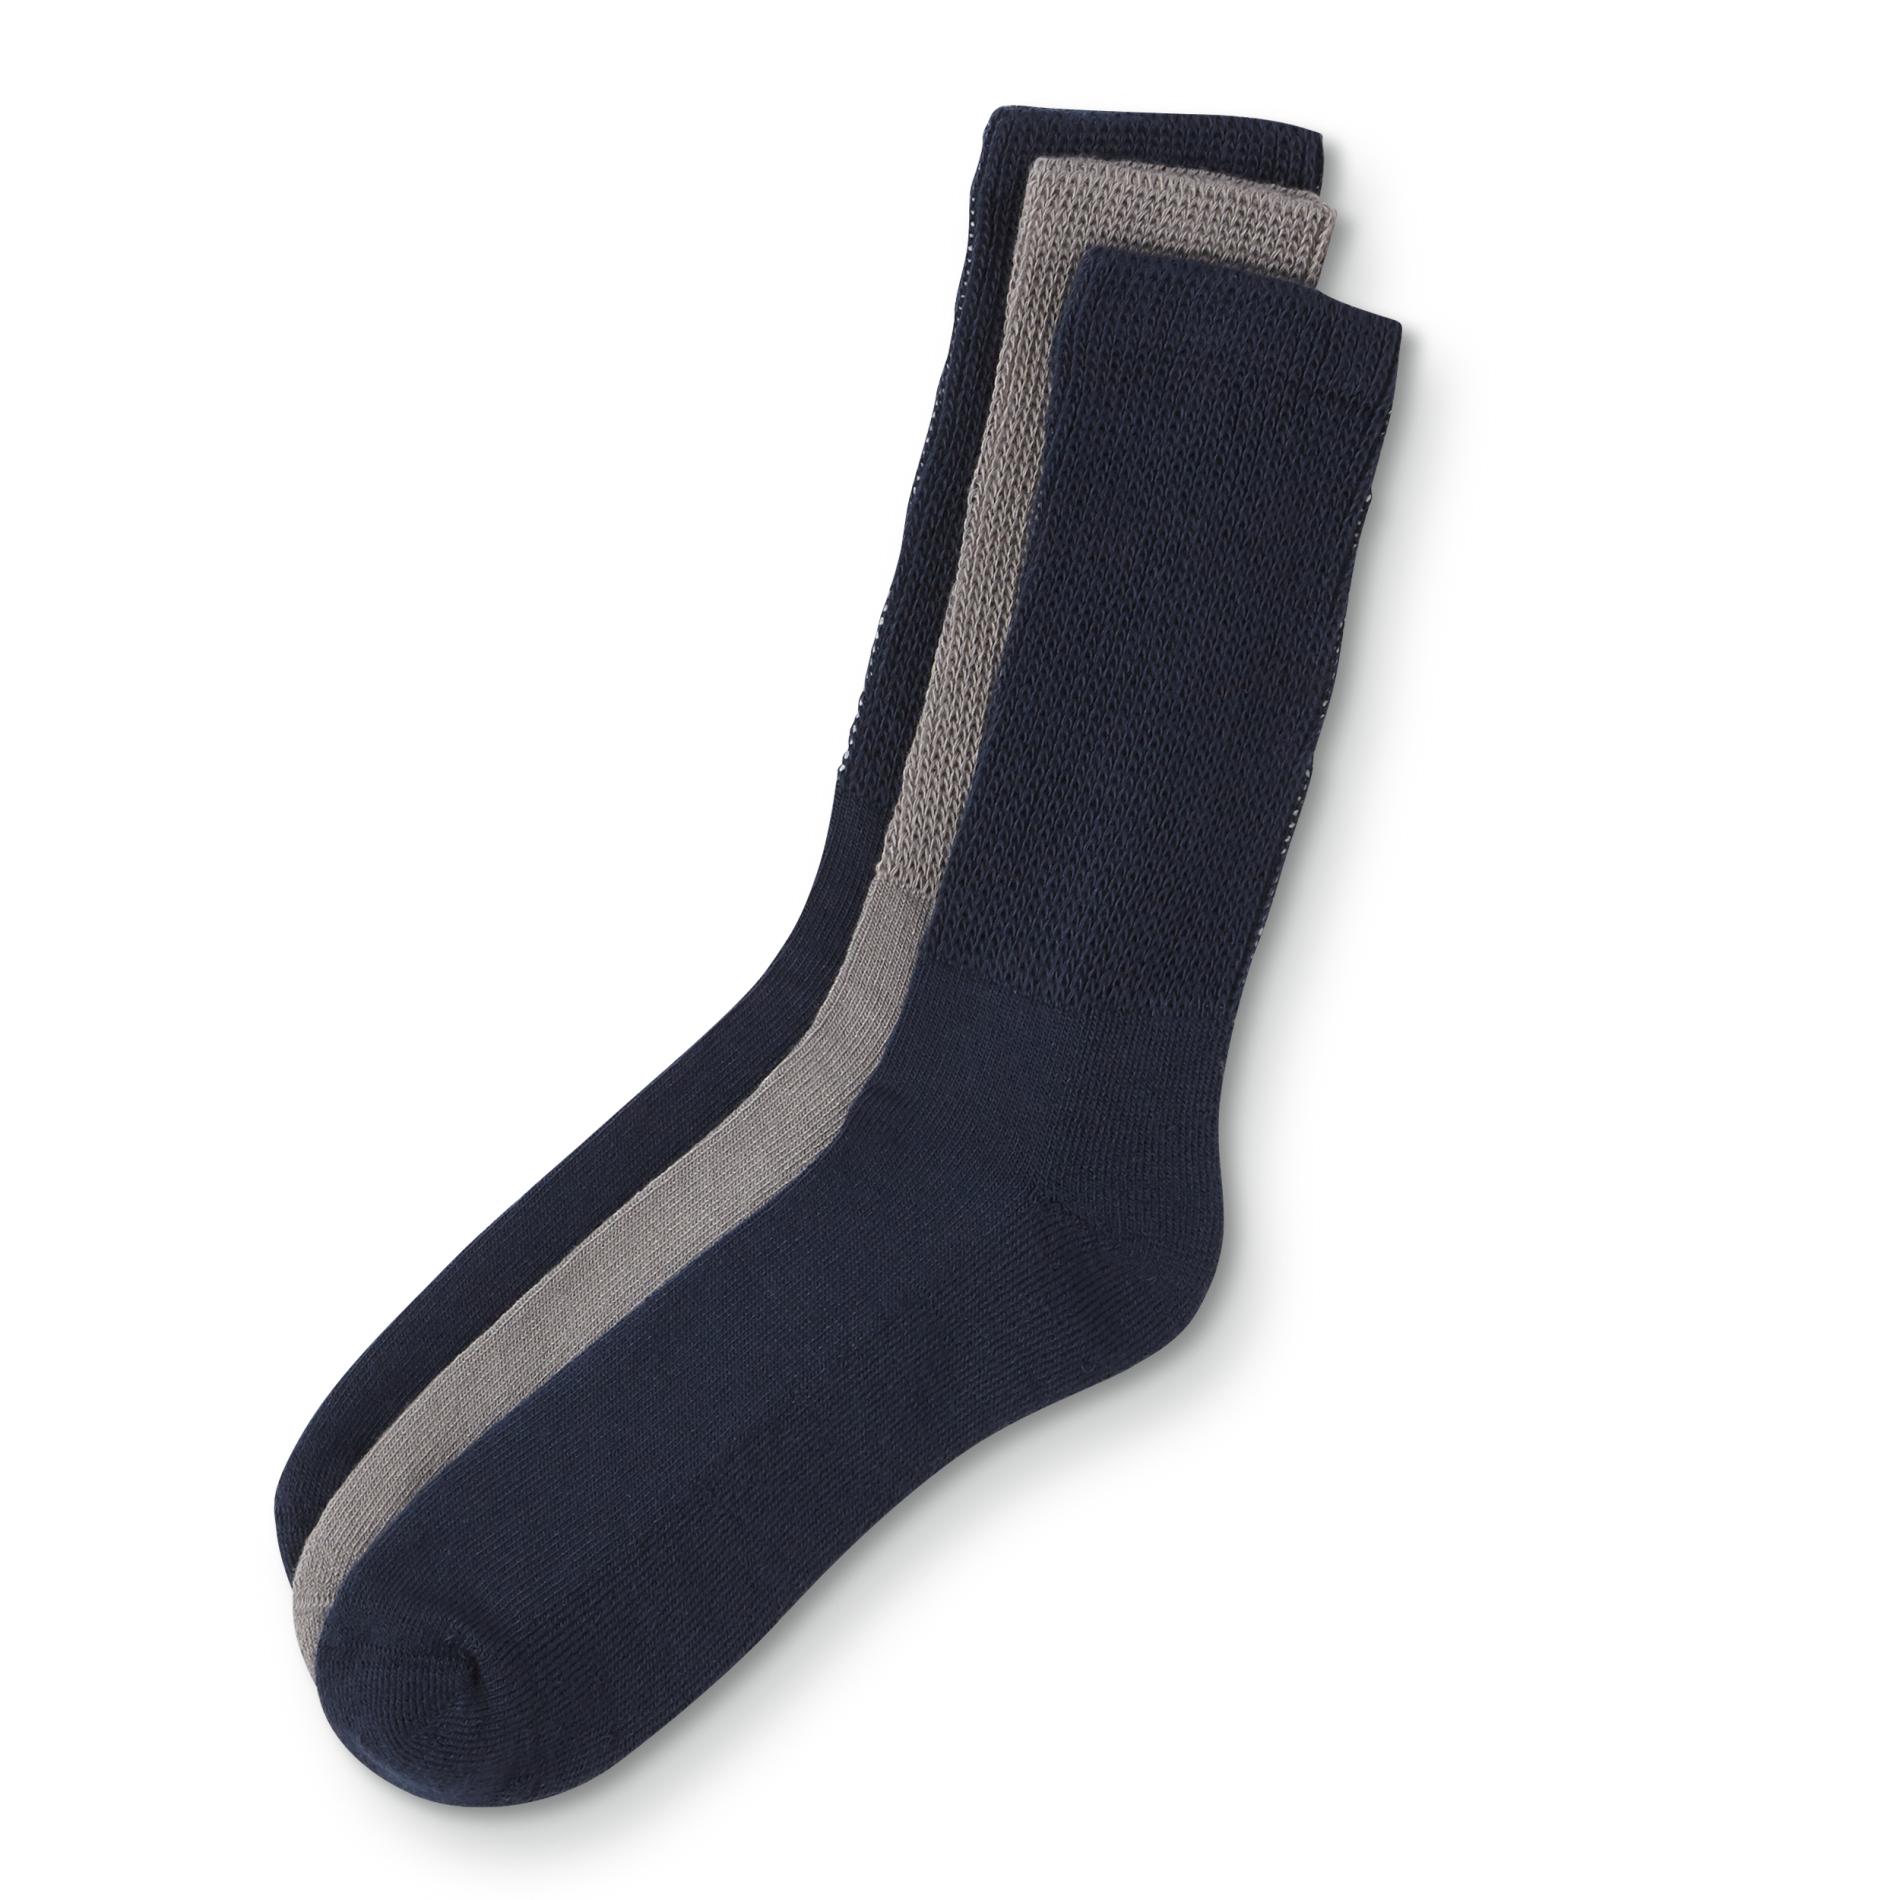 Basic Editions Men's 3-Pairs Non-Binding Wellness Crew Dress Socks